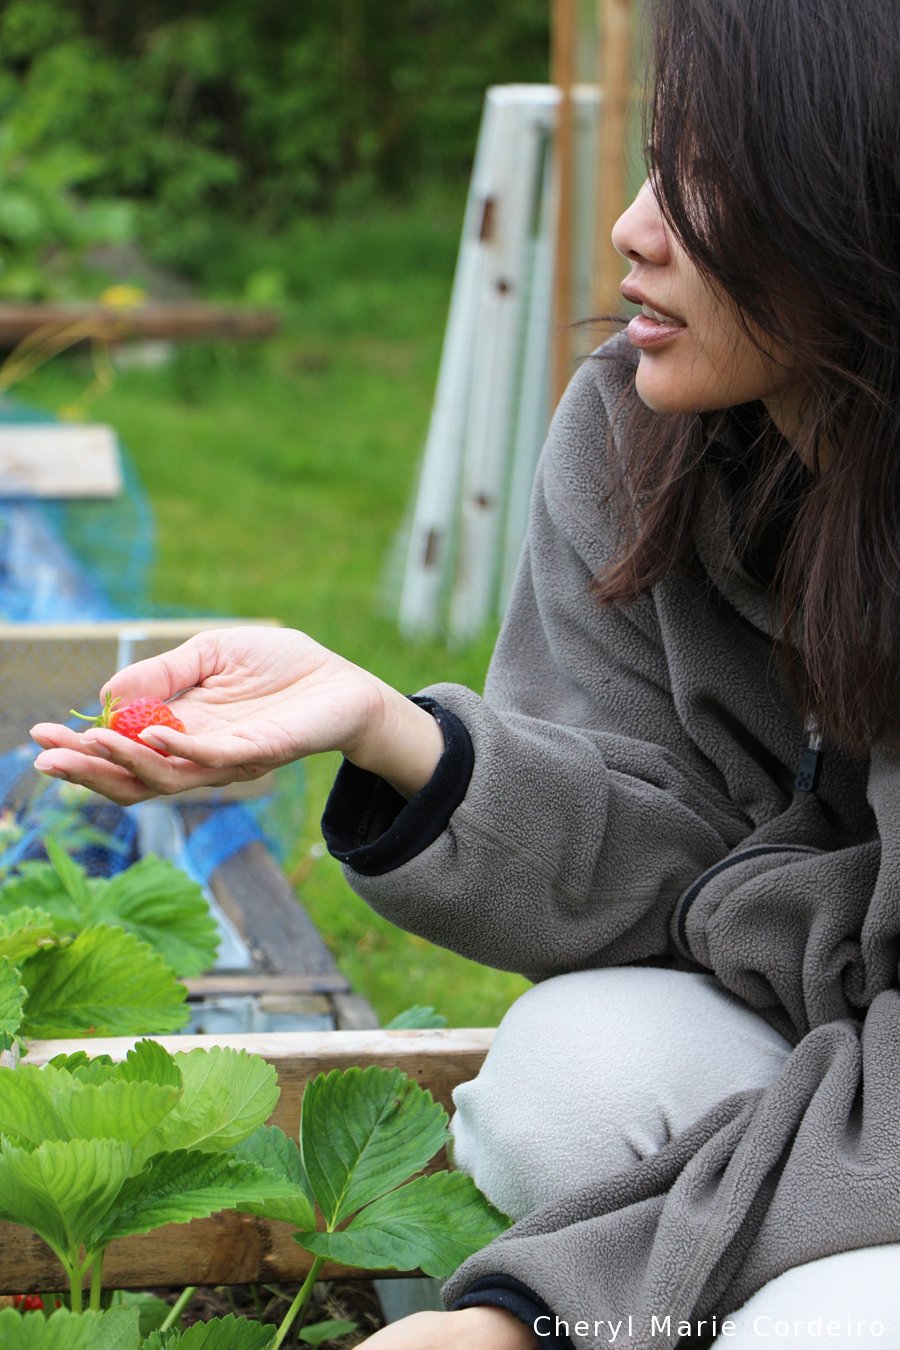 Cheryl Marie Cordeiro, strawberry harvest 2015